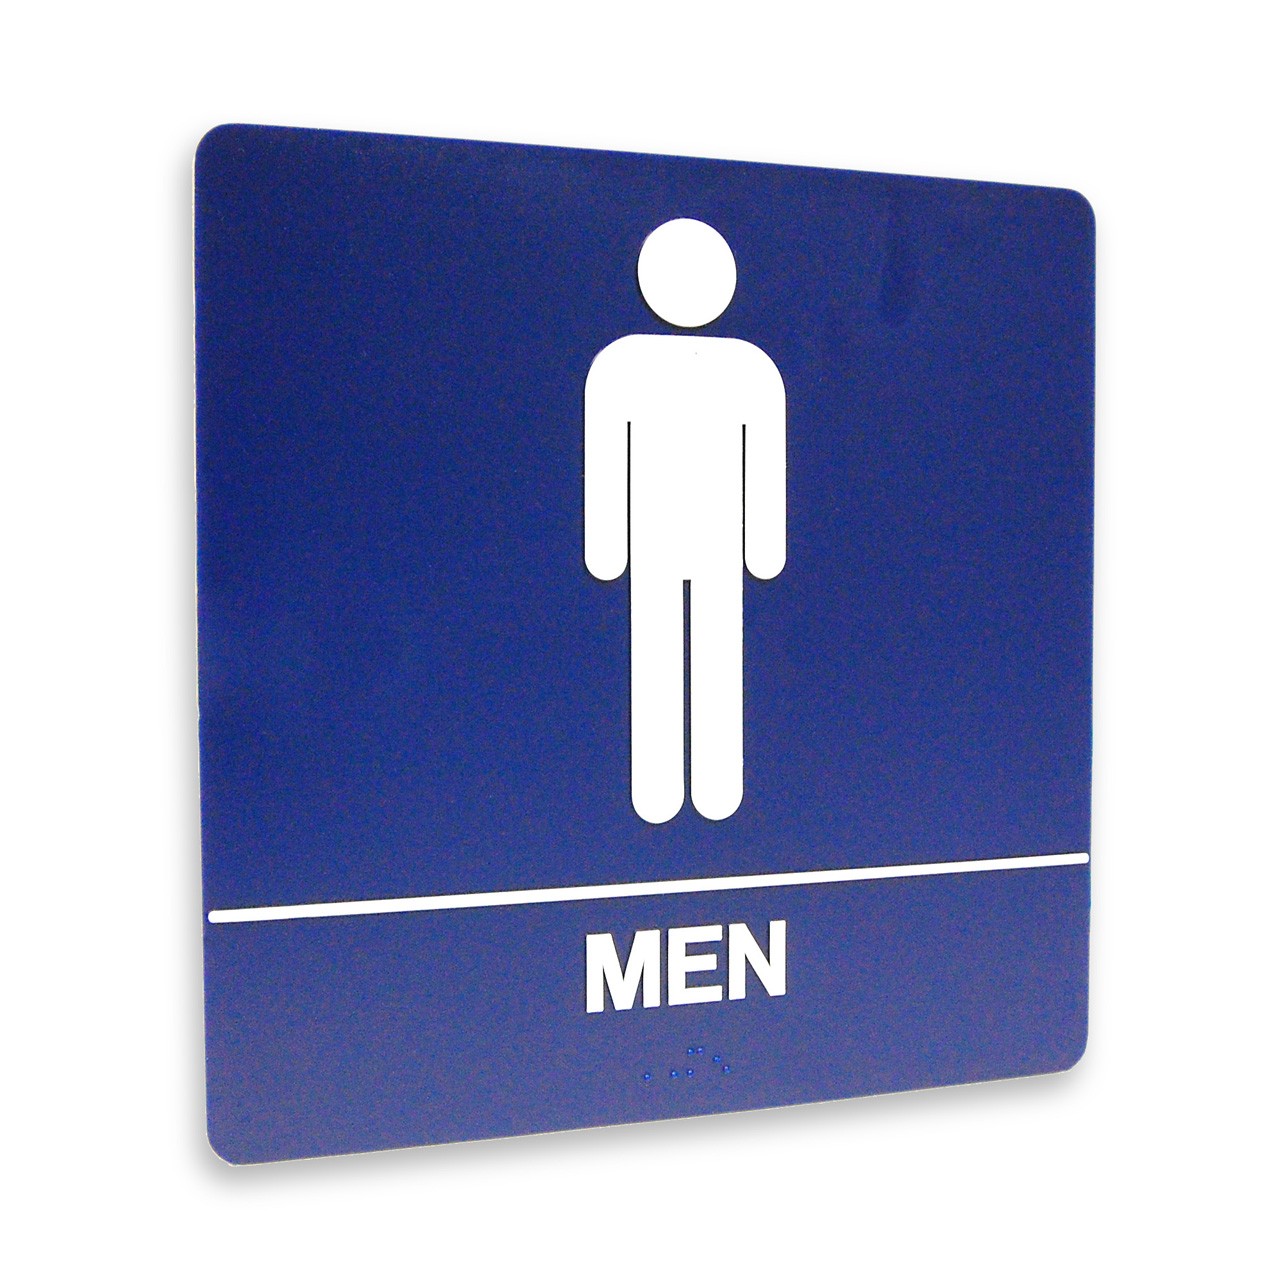 Male Restroom Sign Designing Tips HomeDecorMags.